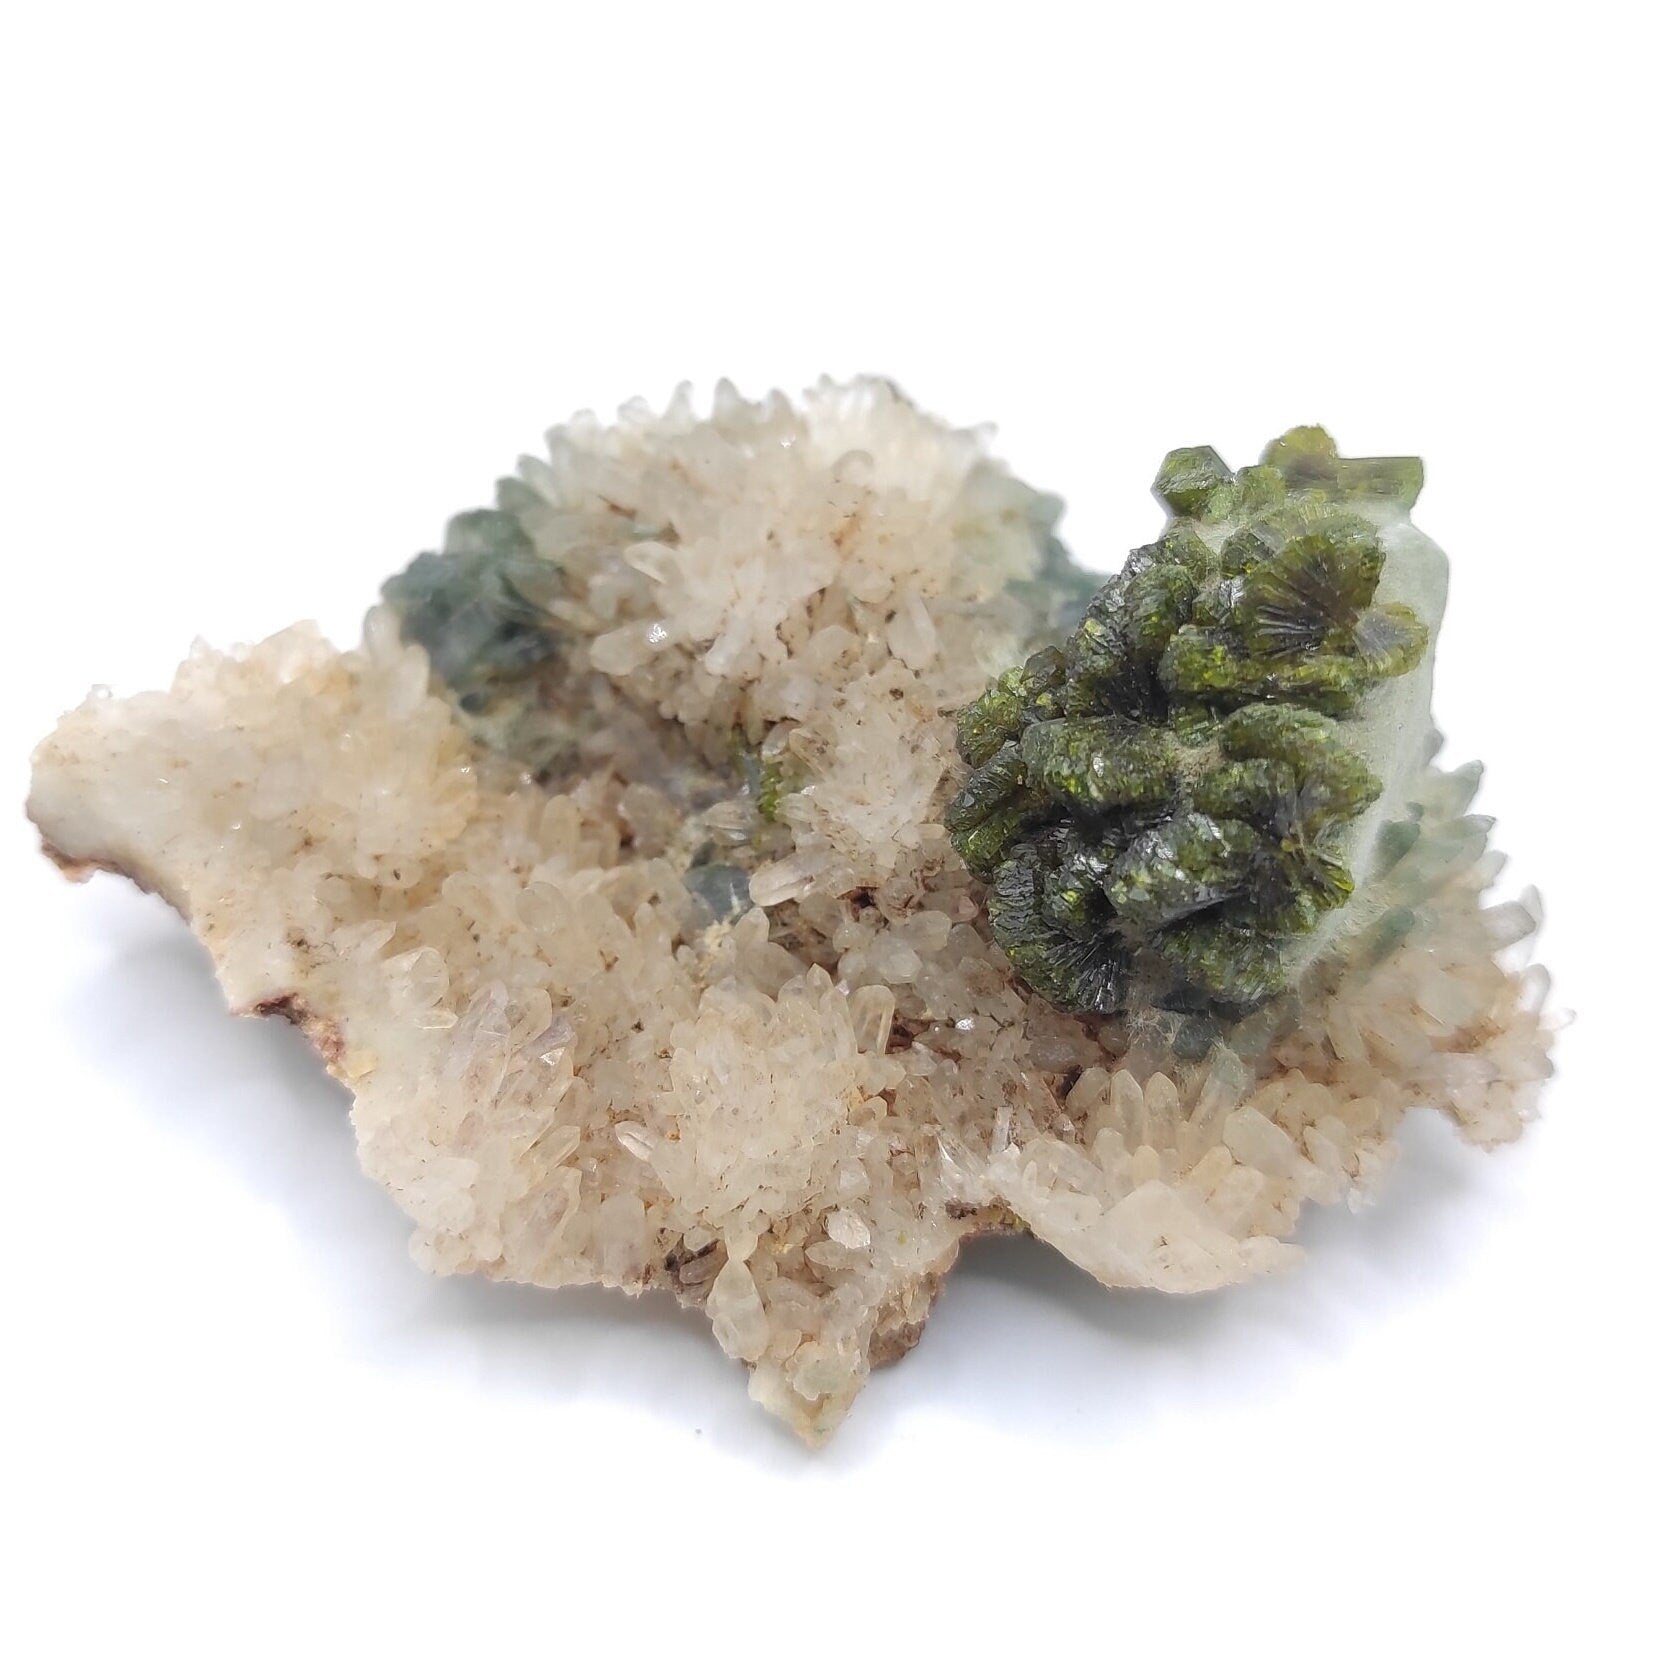 39g Epidote with Quartz - Imilchil, Morocco - Green Epidote Crystal Cluster - Raw Mineral Specimen - Green Epidote and Quartz Crystal